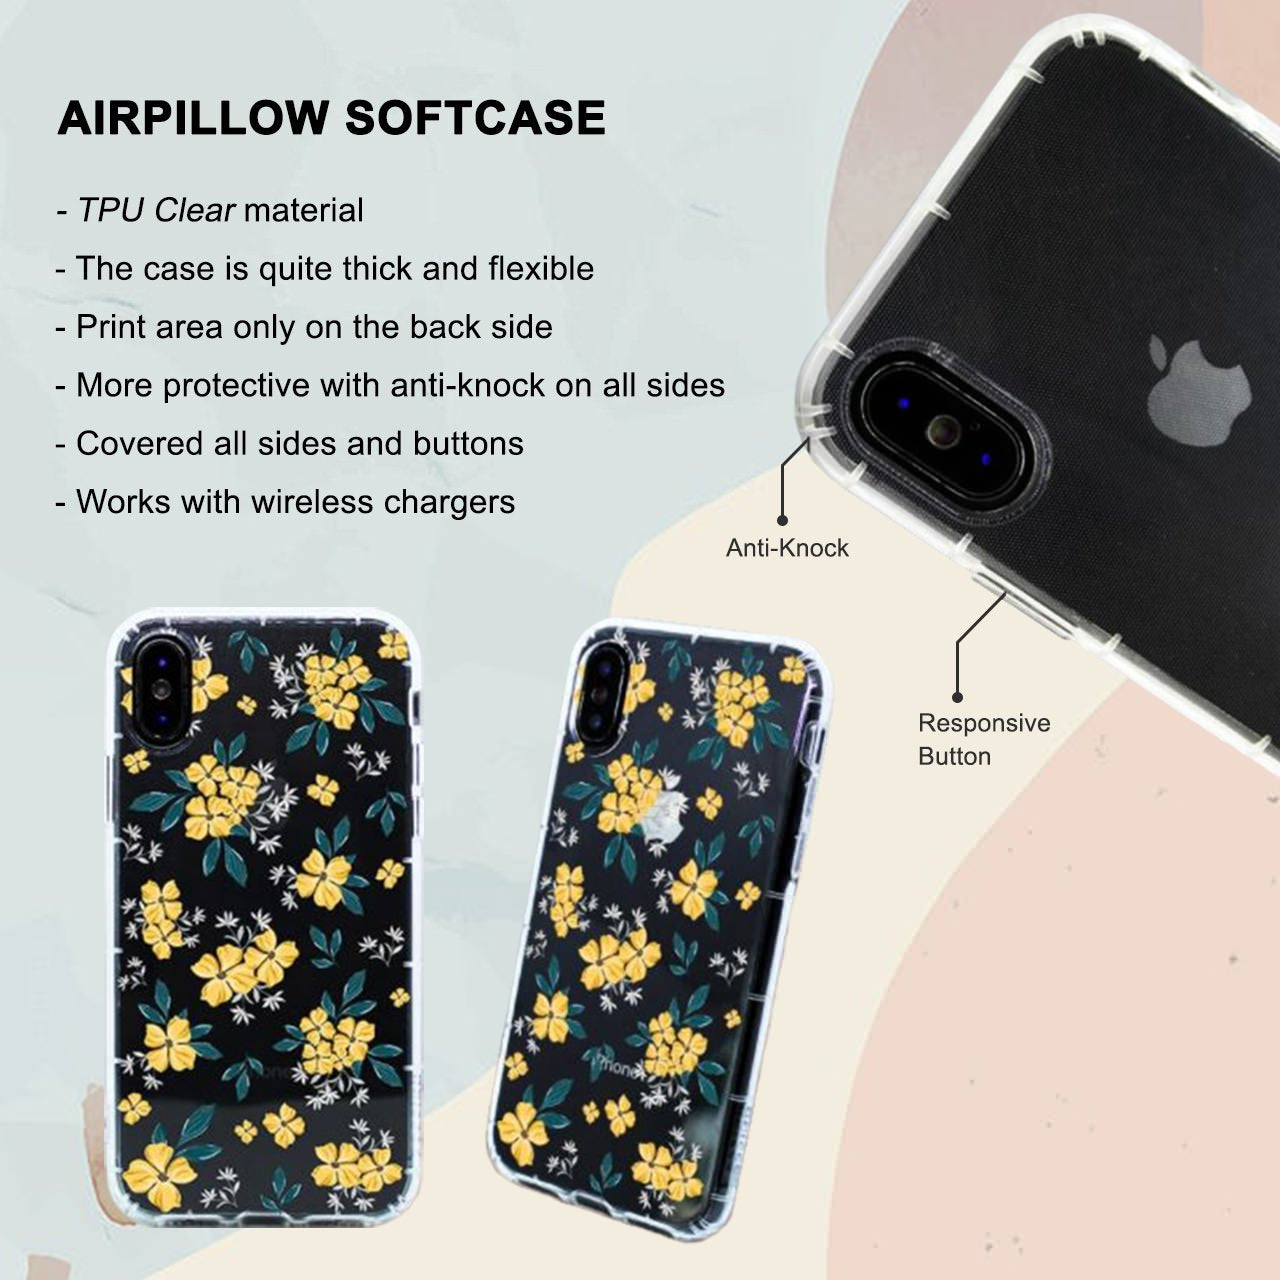 Amity Divergent Faction iPhone 6 / 6s Plus Case